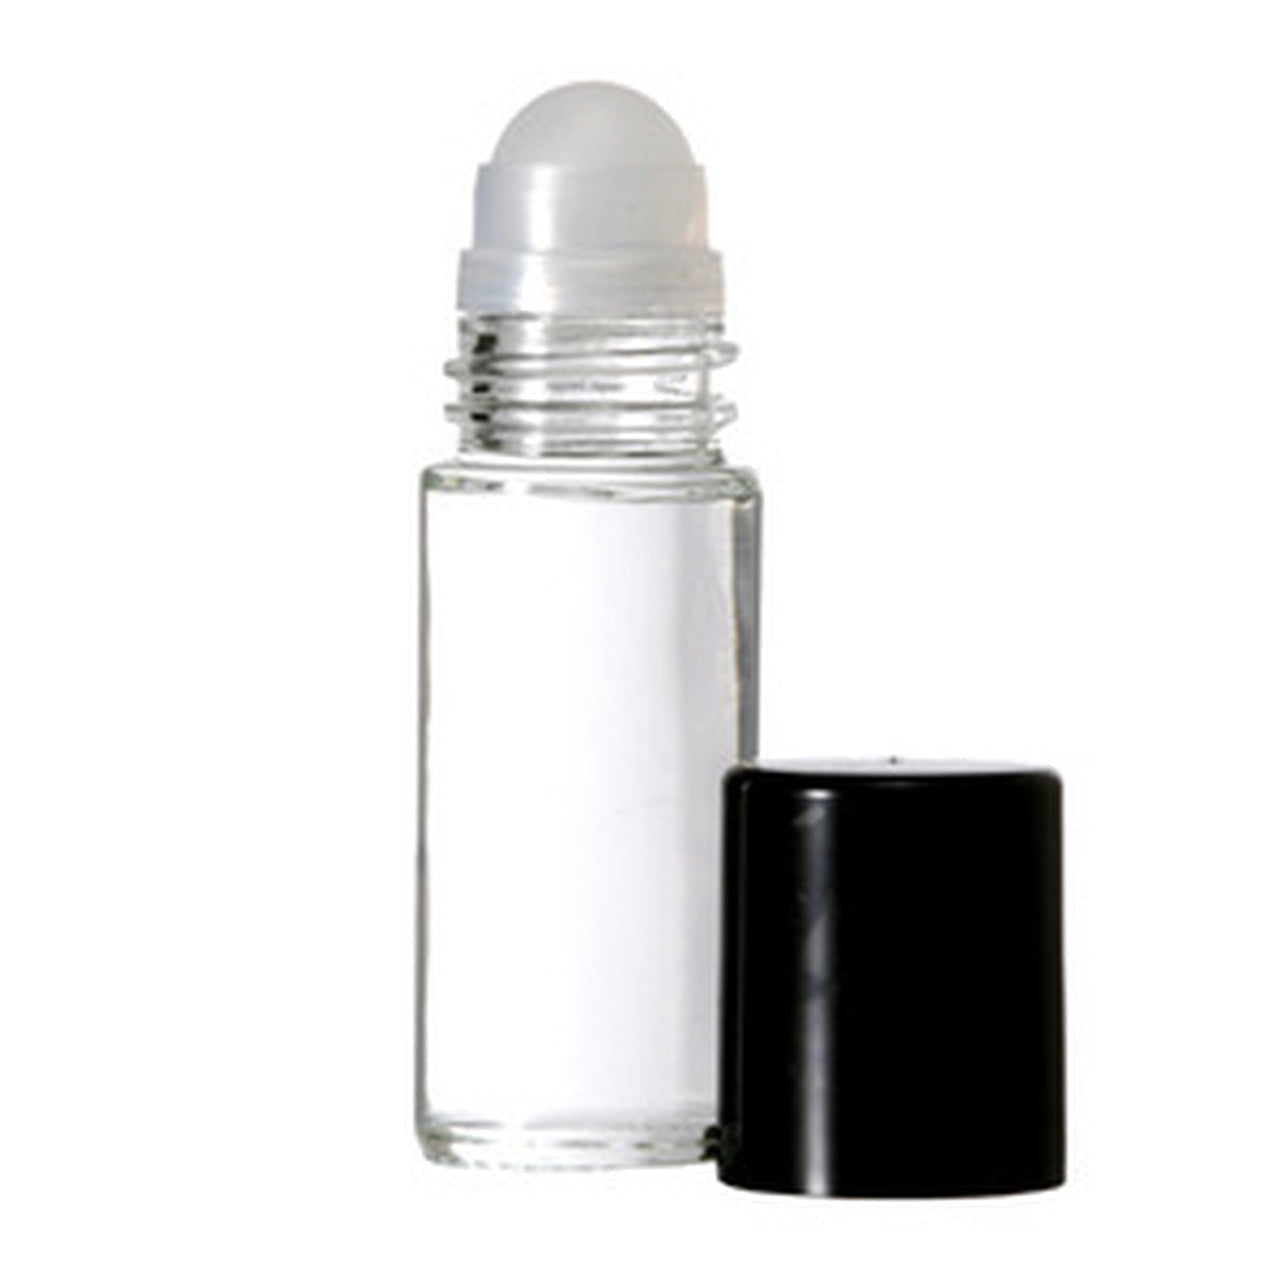 Daisy - Our Version for Women - Premium Fragrance & Body Oil